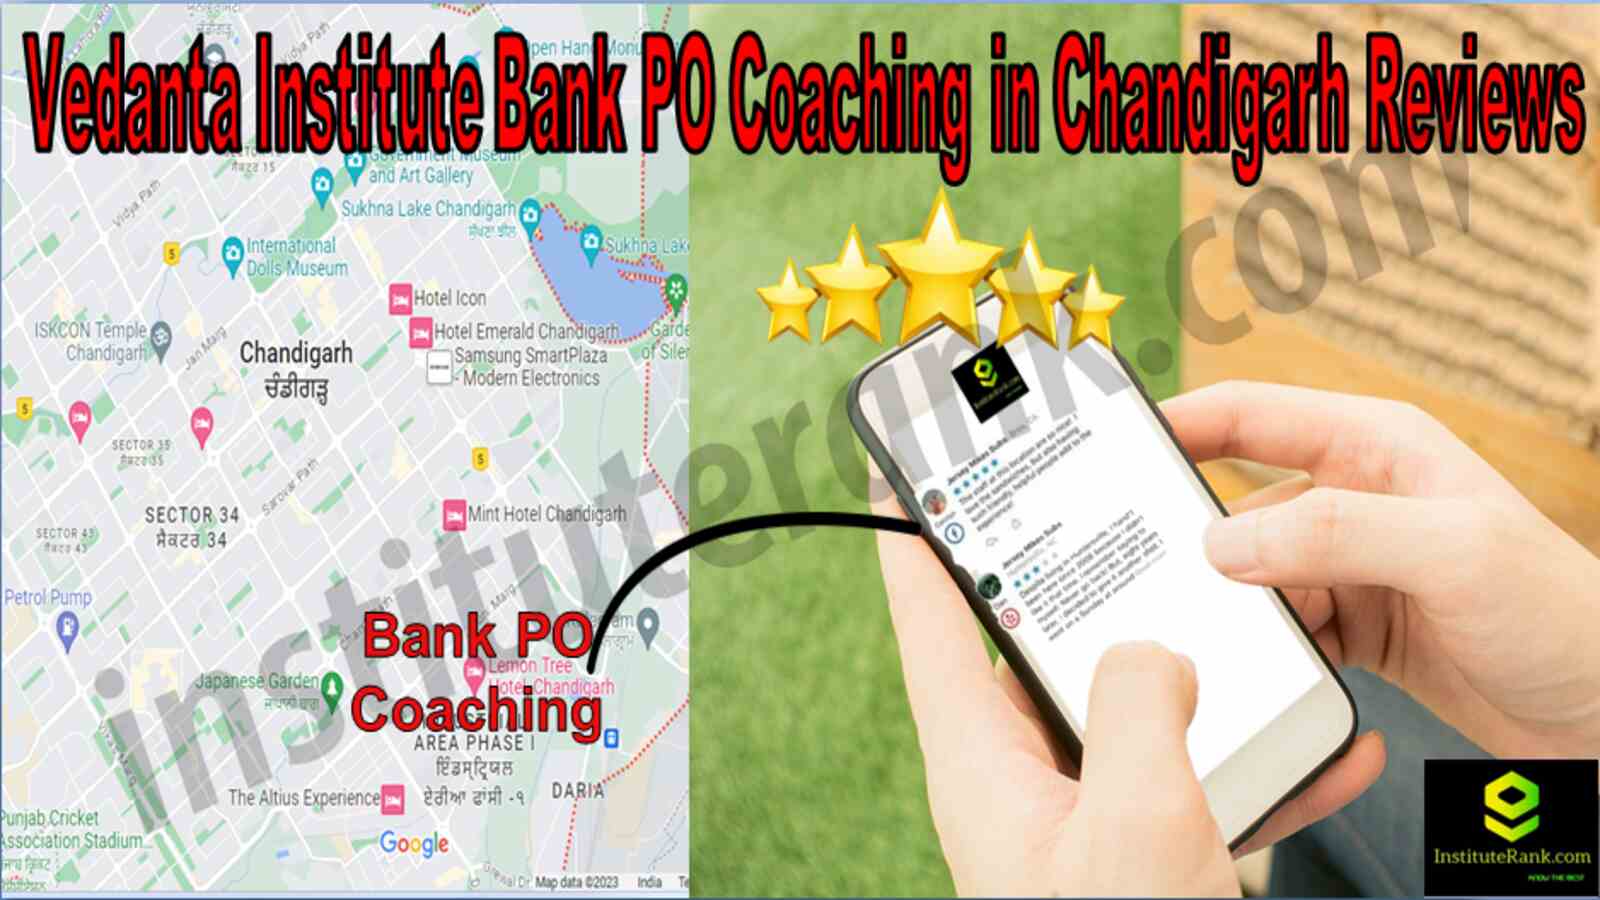  Bank PO Coaching in Chandigarh Reviews